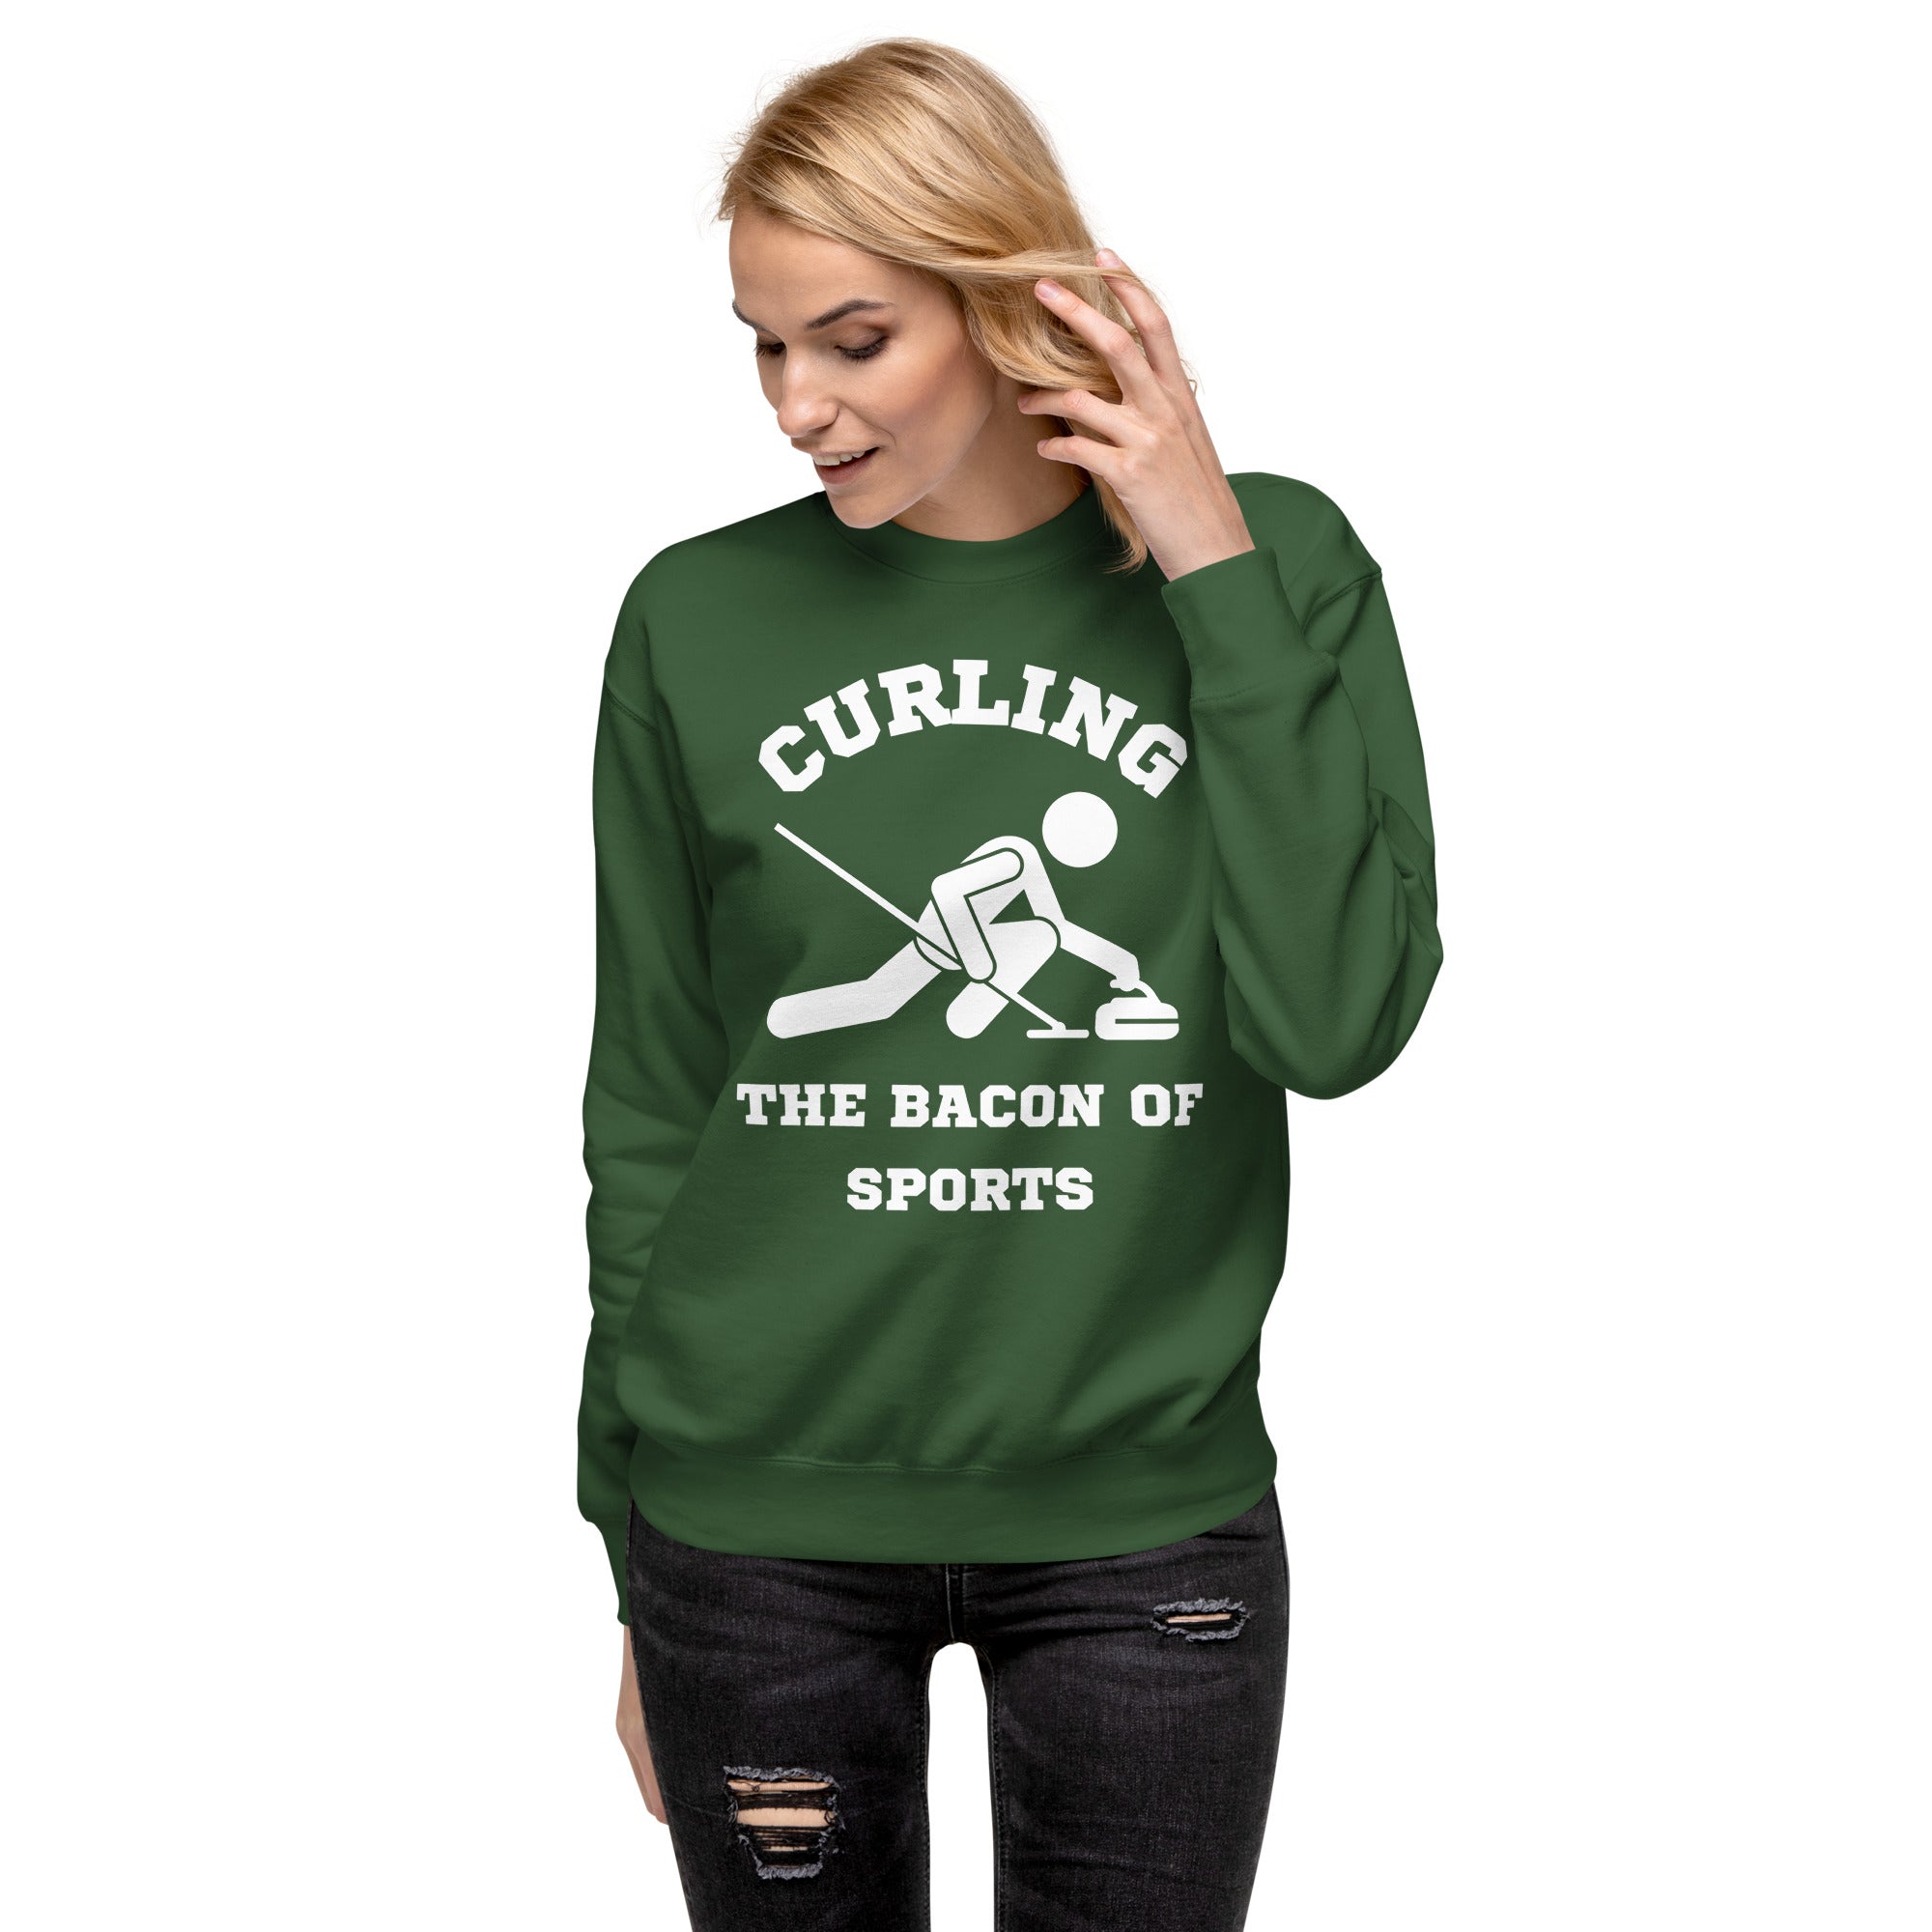 Curling The Bacon Of Sports Women's Premium Sweatshirt